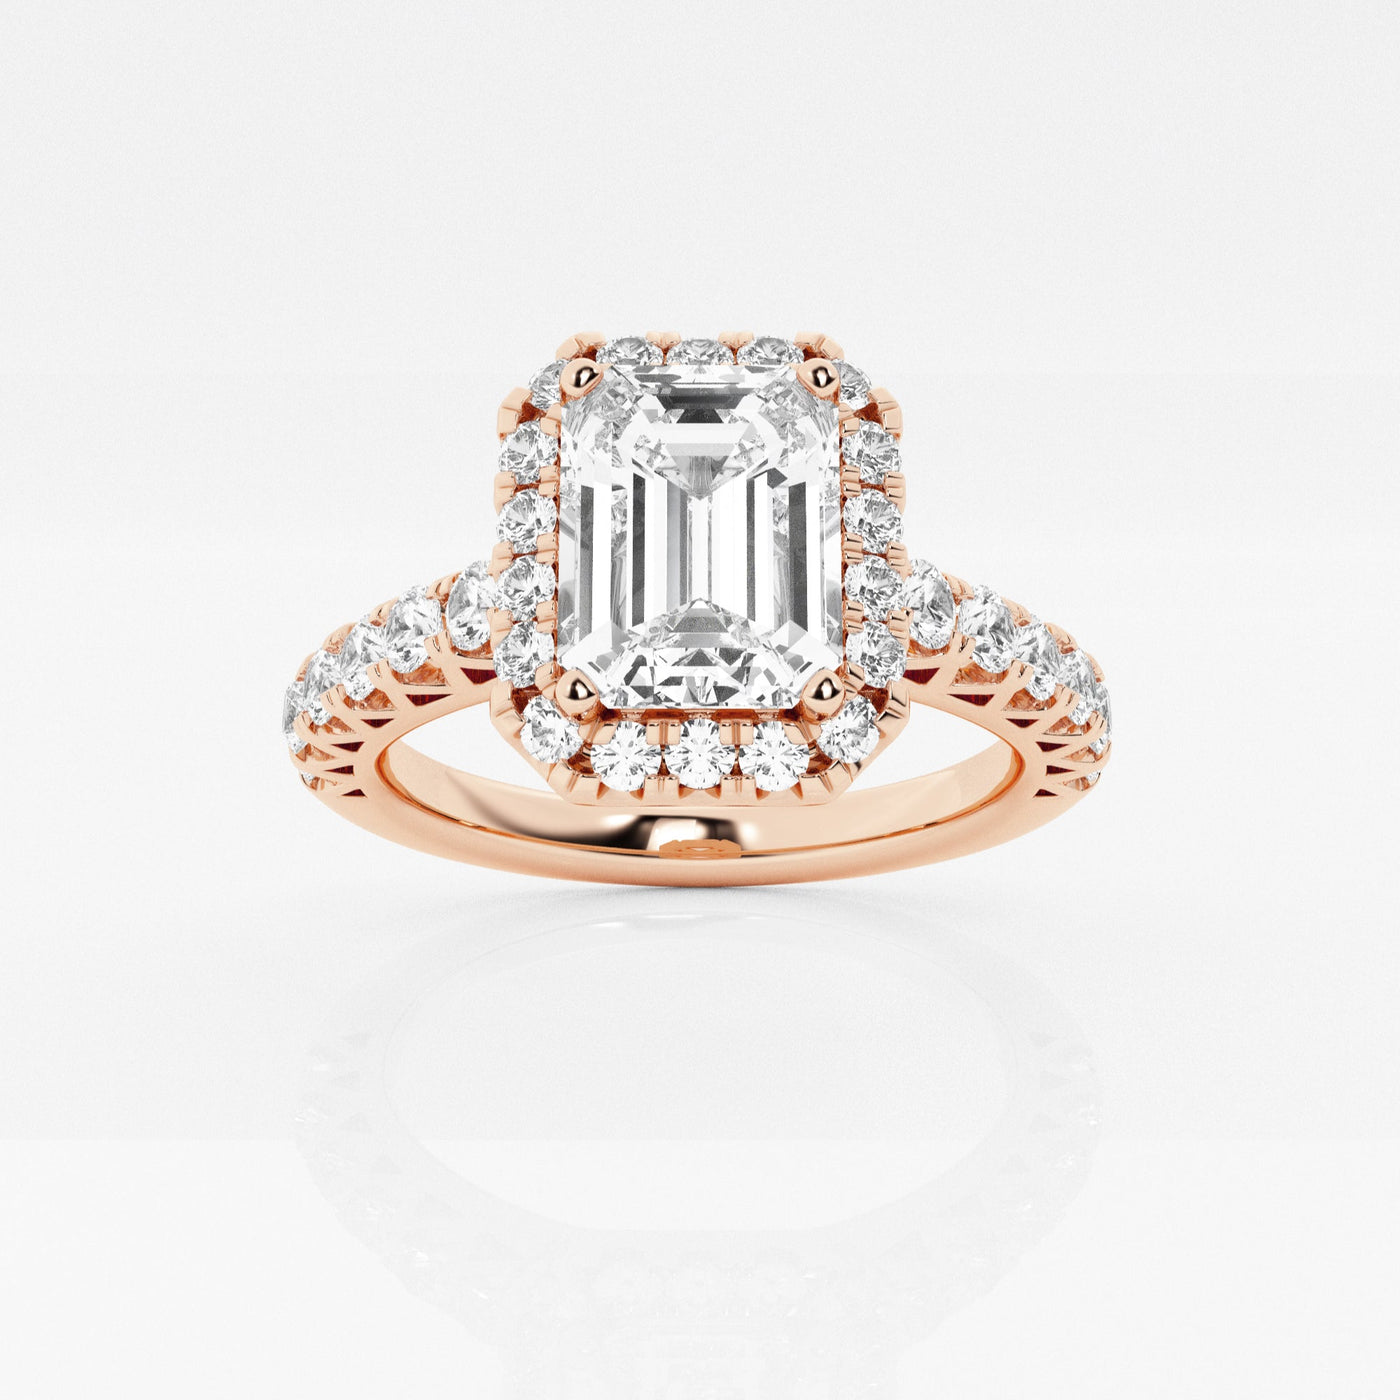 _main_image@SKU:LGR0621X2E075H1GS4~#carat_1.37#diamond-quality_fg,-vs2+#metal_18k-rose-gold